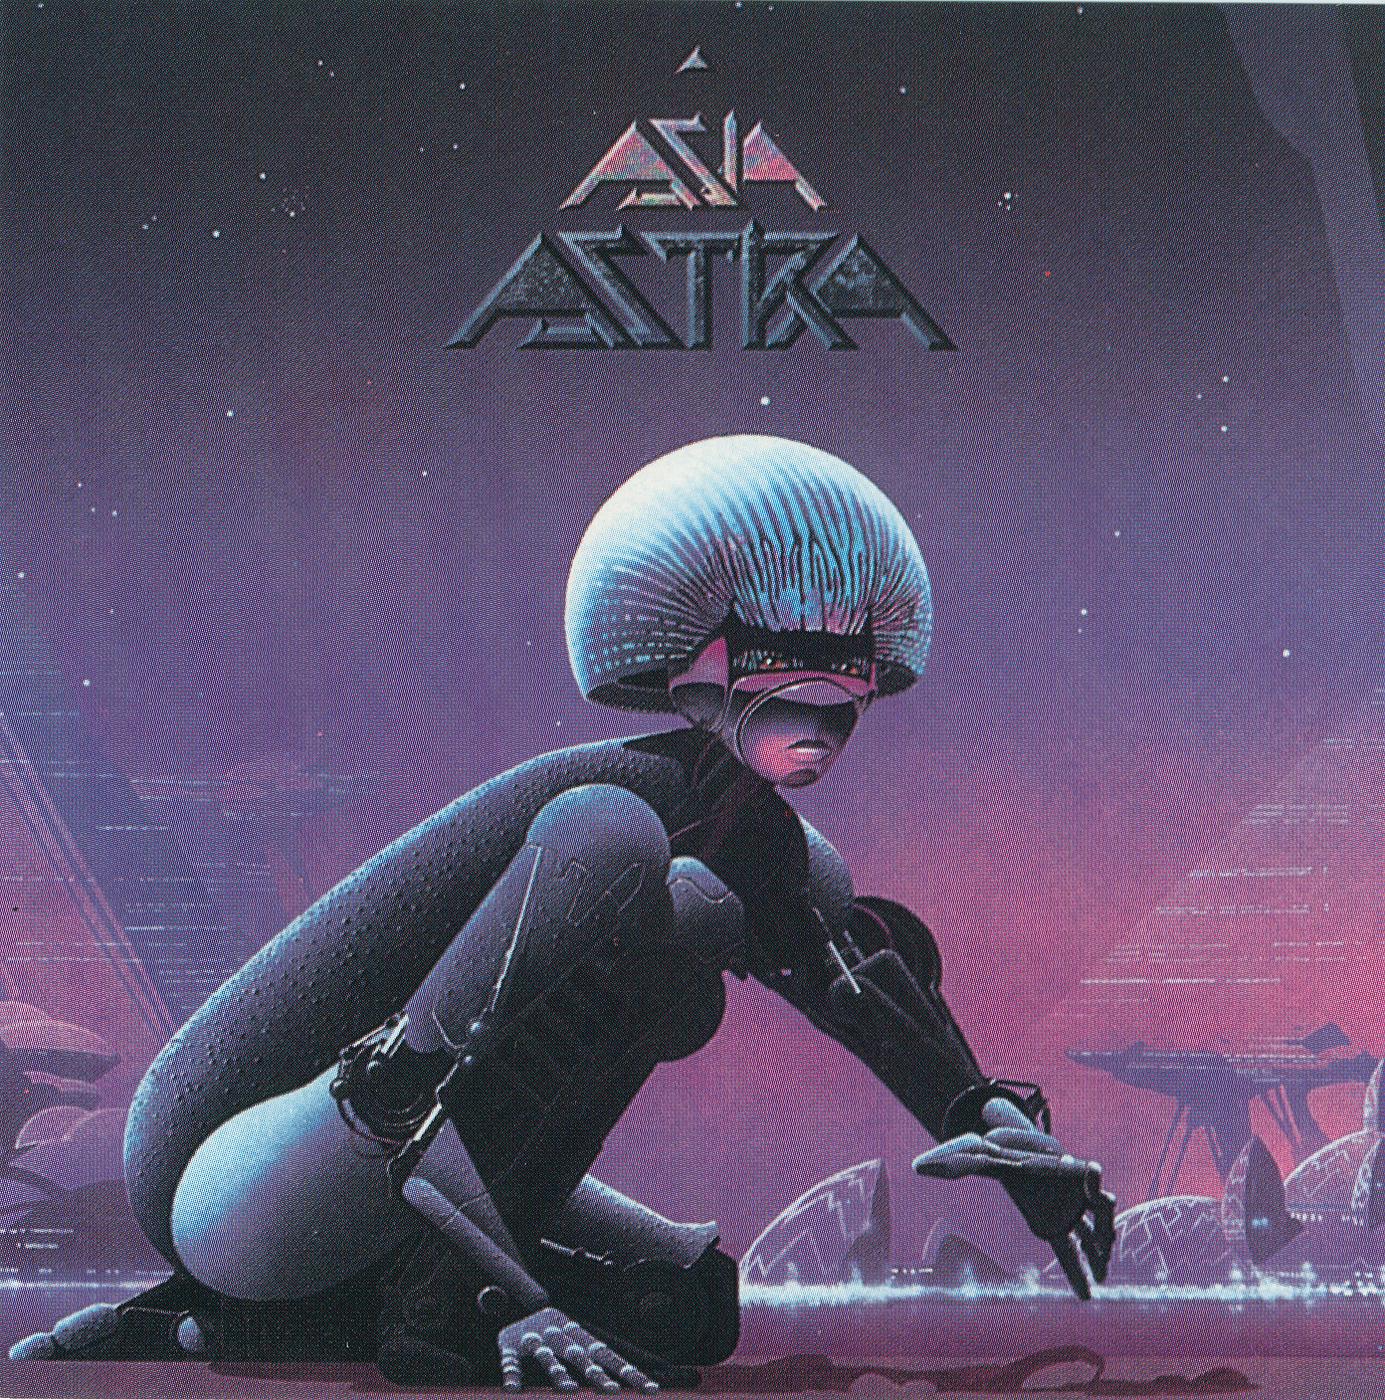 Постер альбома Astra